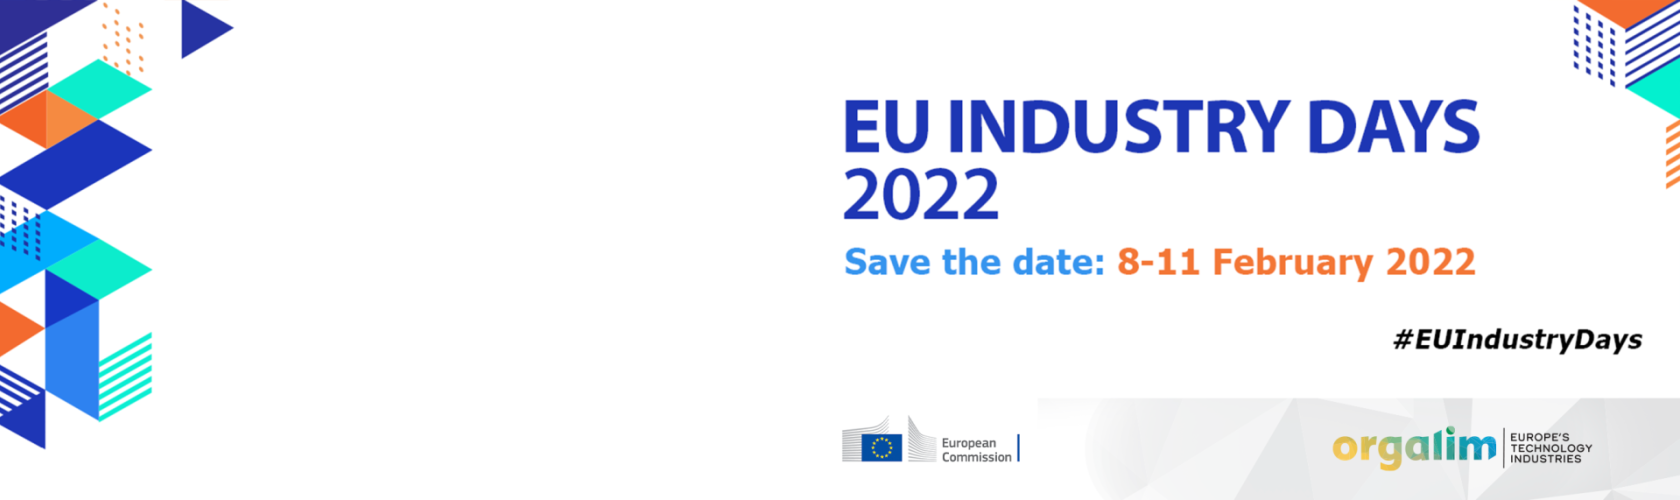 Register now: EU Industry Days 2022